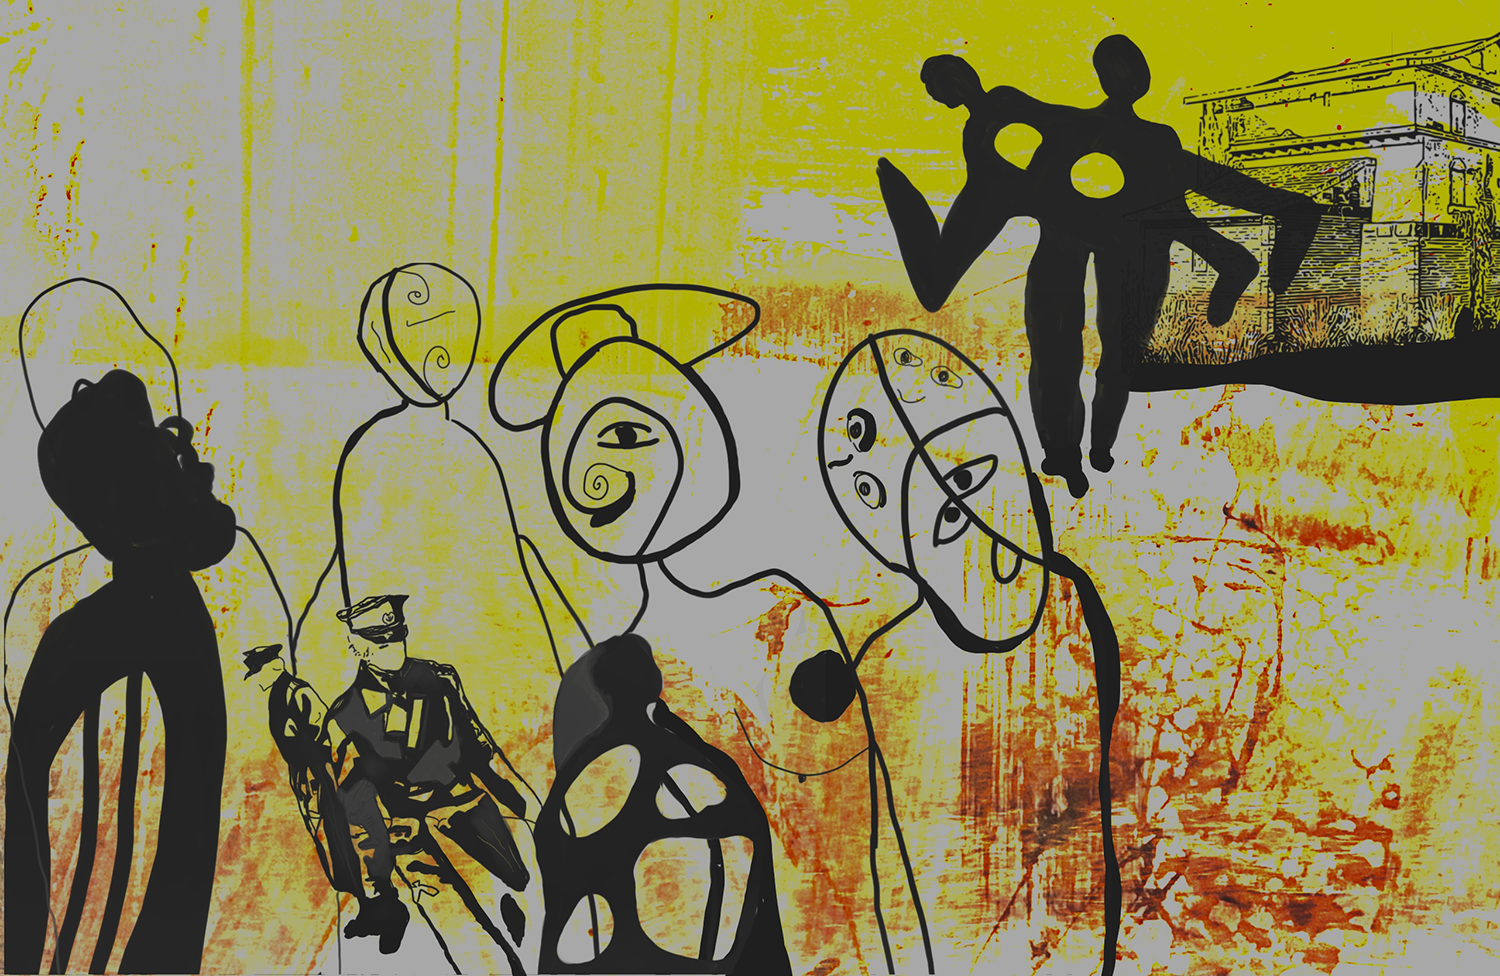 Yellow background, figures